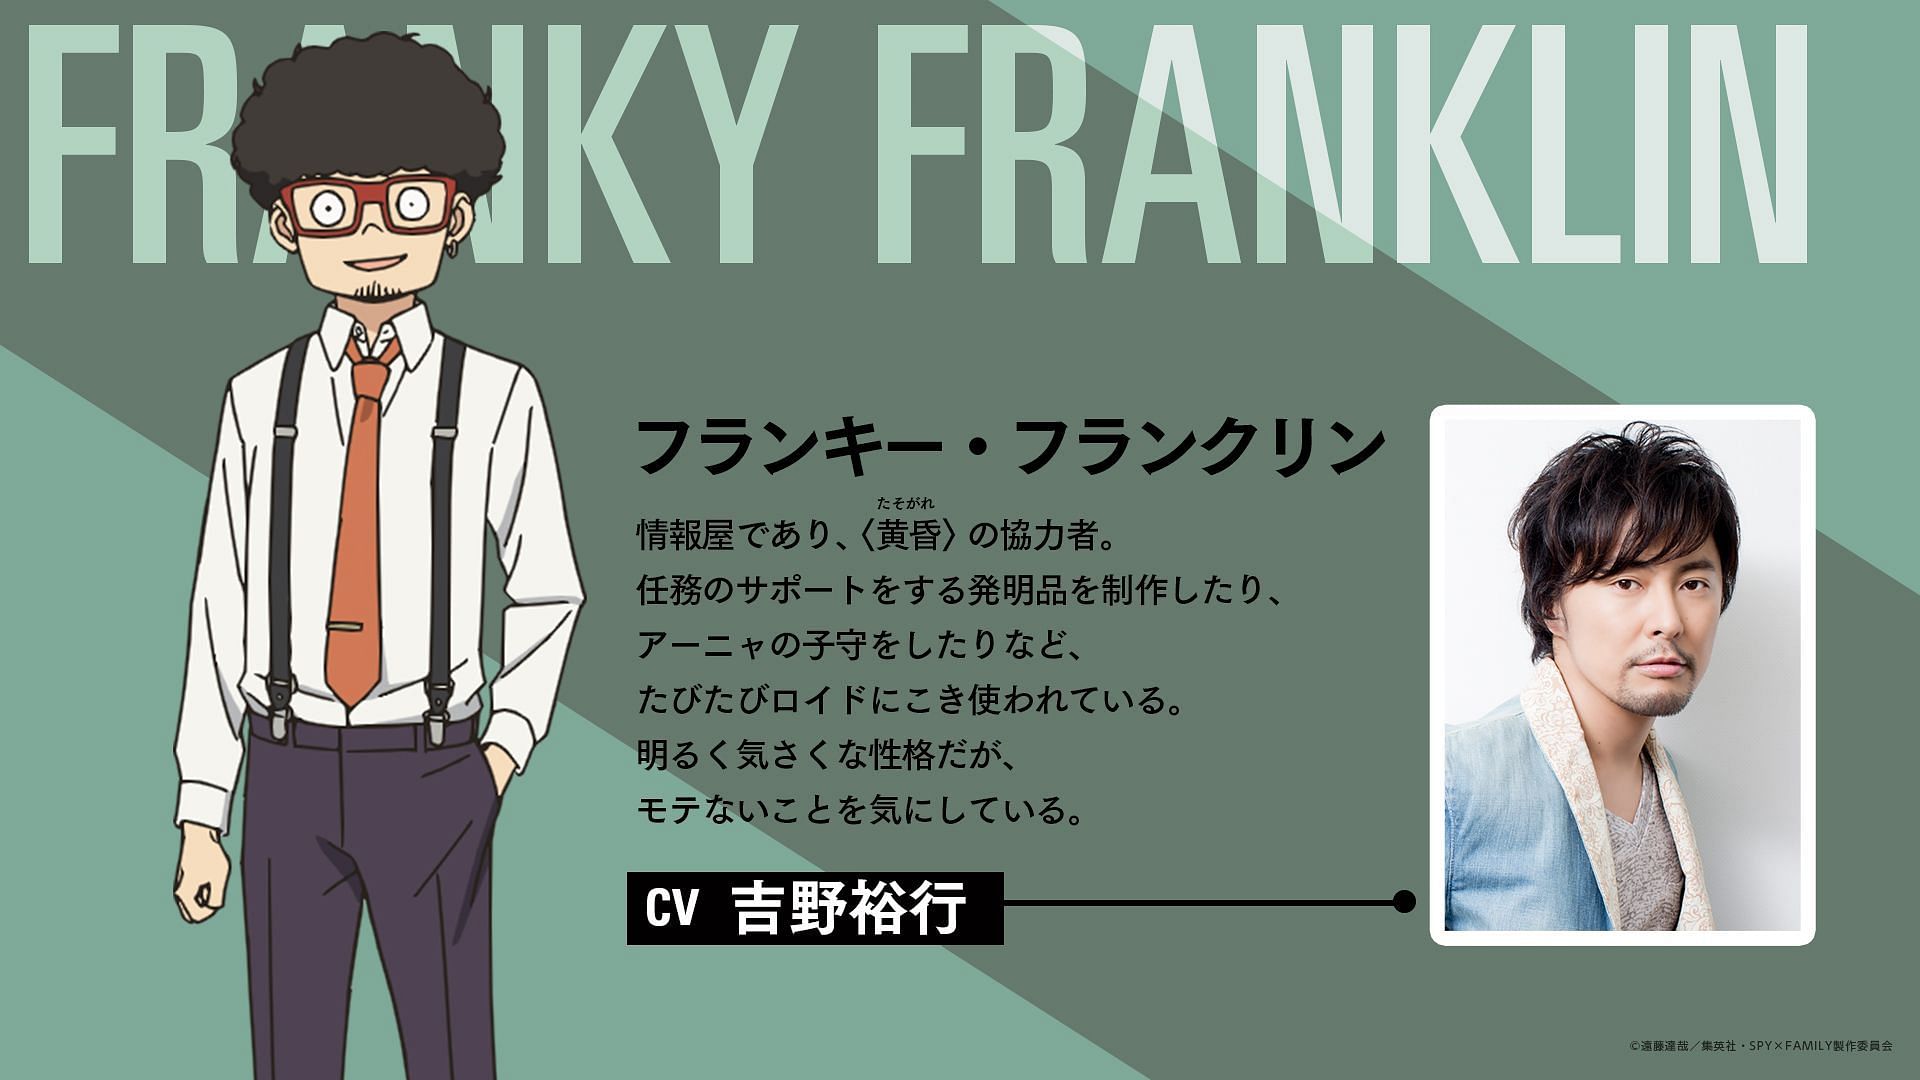 Franky Franklin from the Spy x Family series (Image via Twitter/@animetv_jp)